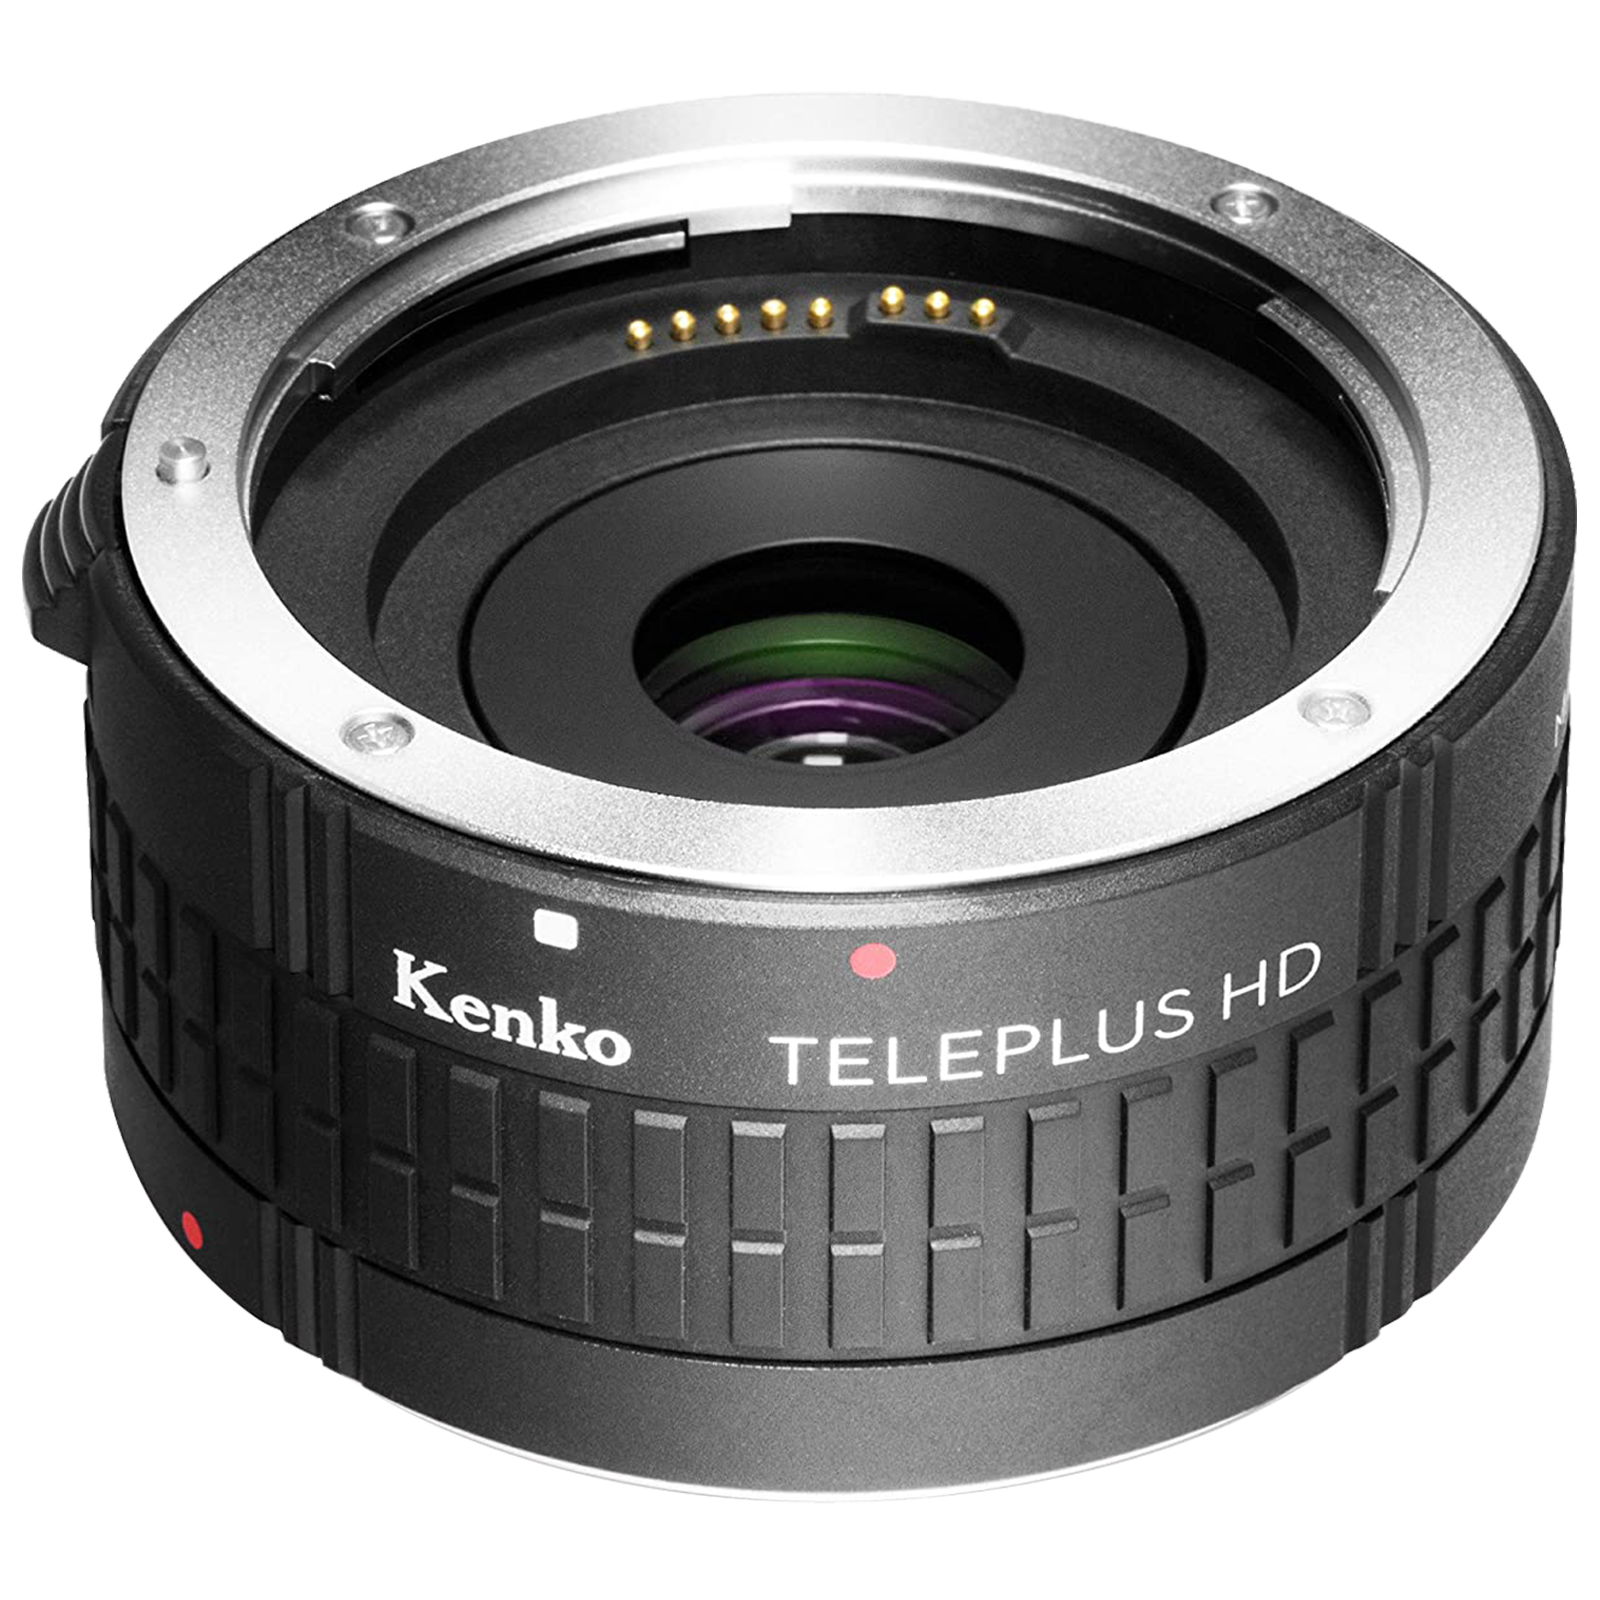 Kenko Teleplus HD DGX Tele Converter For Camera And Lens (Multicoated Optical Glass, 062524, Black)_1